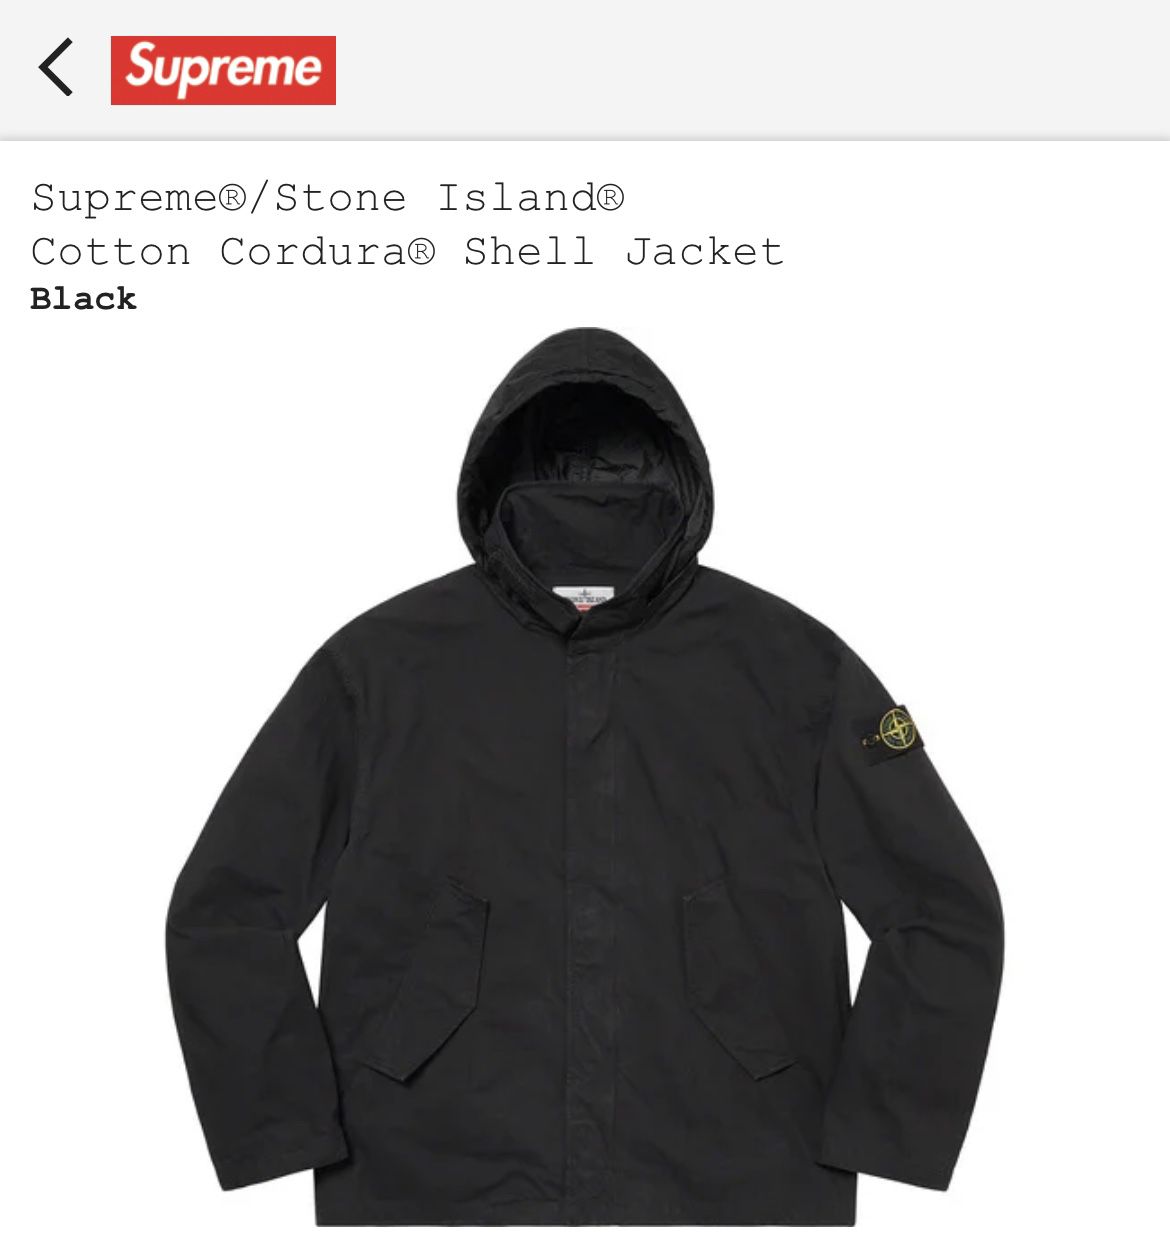 Supreme®/Stone Island® Cotton Cordura Shell Jacket Black S